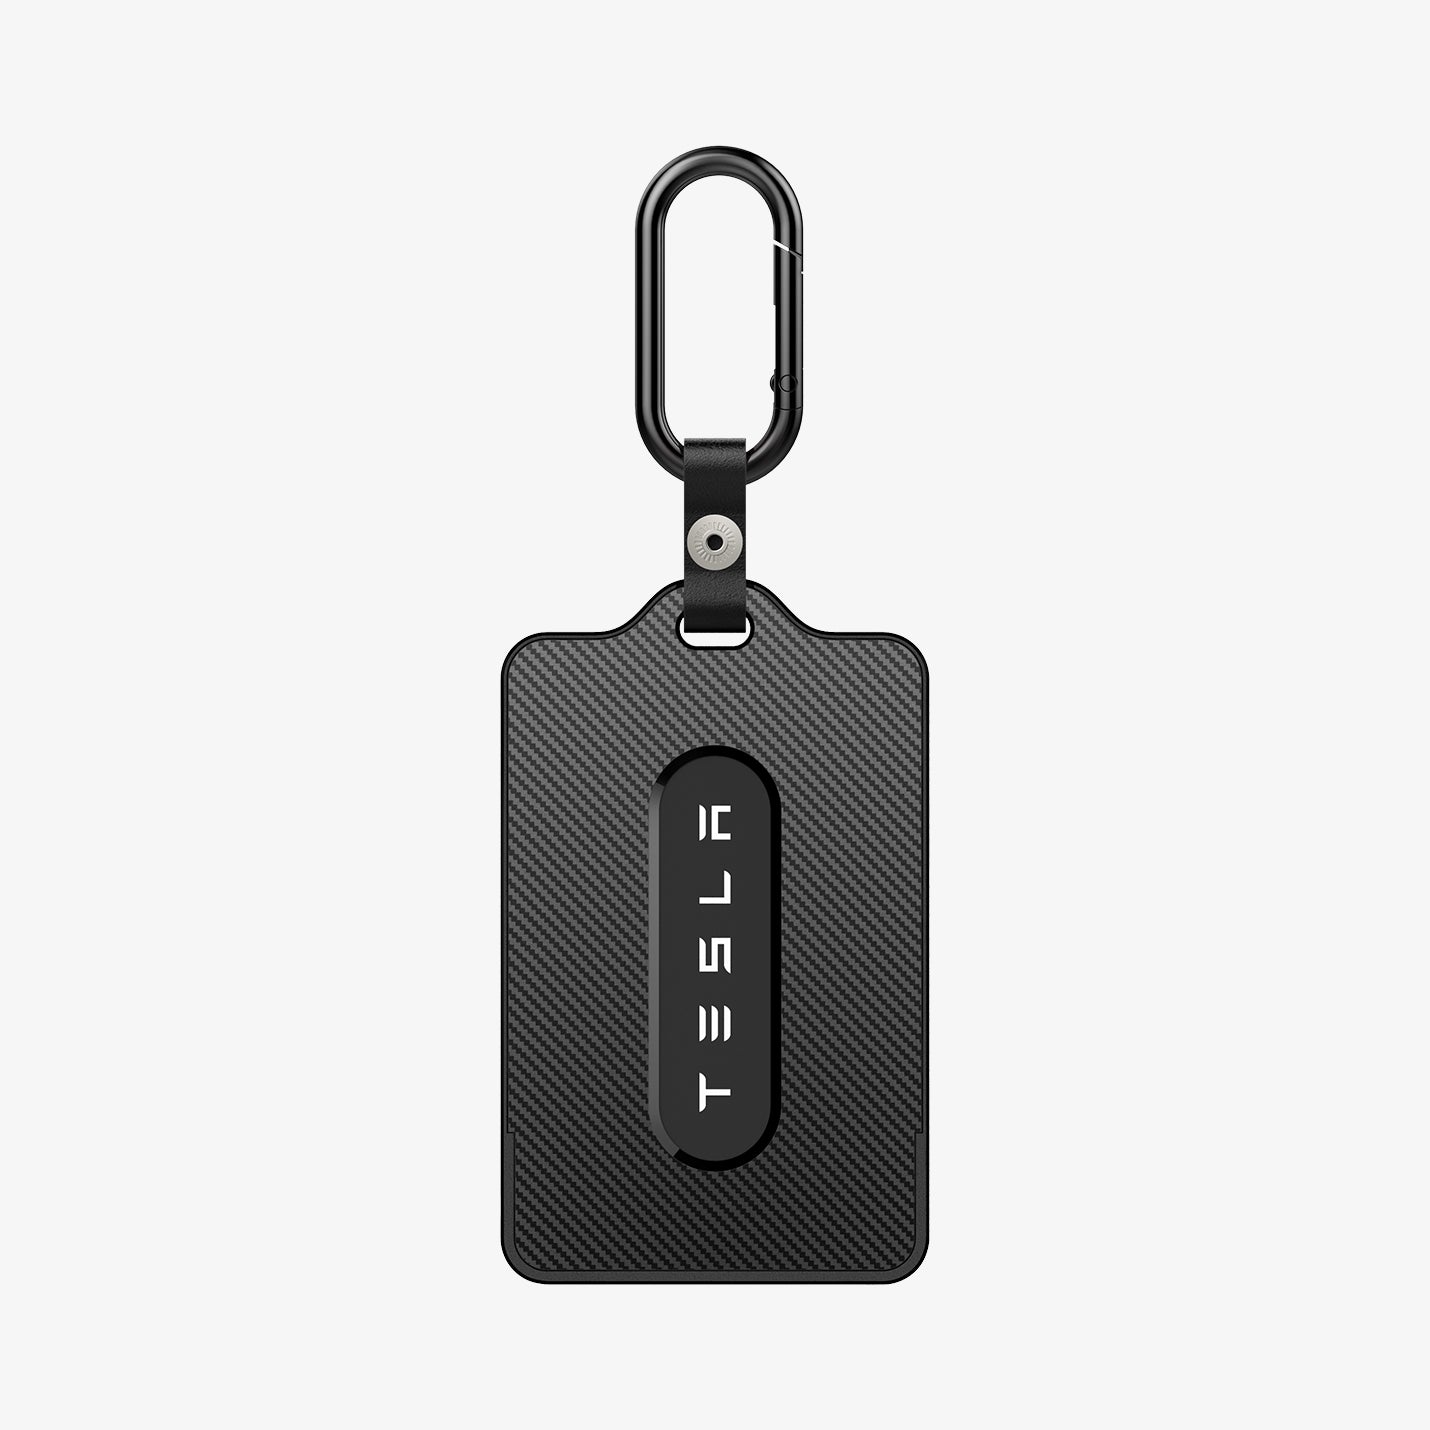 Black Aluminum w/Keychain Key Card Holder Protector For Tesla